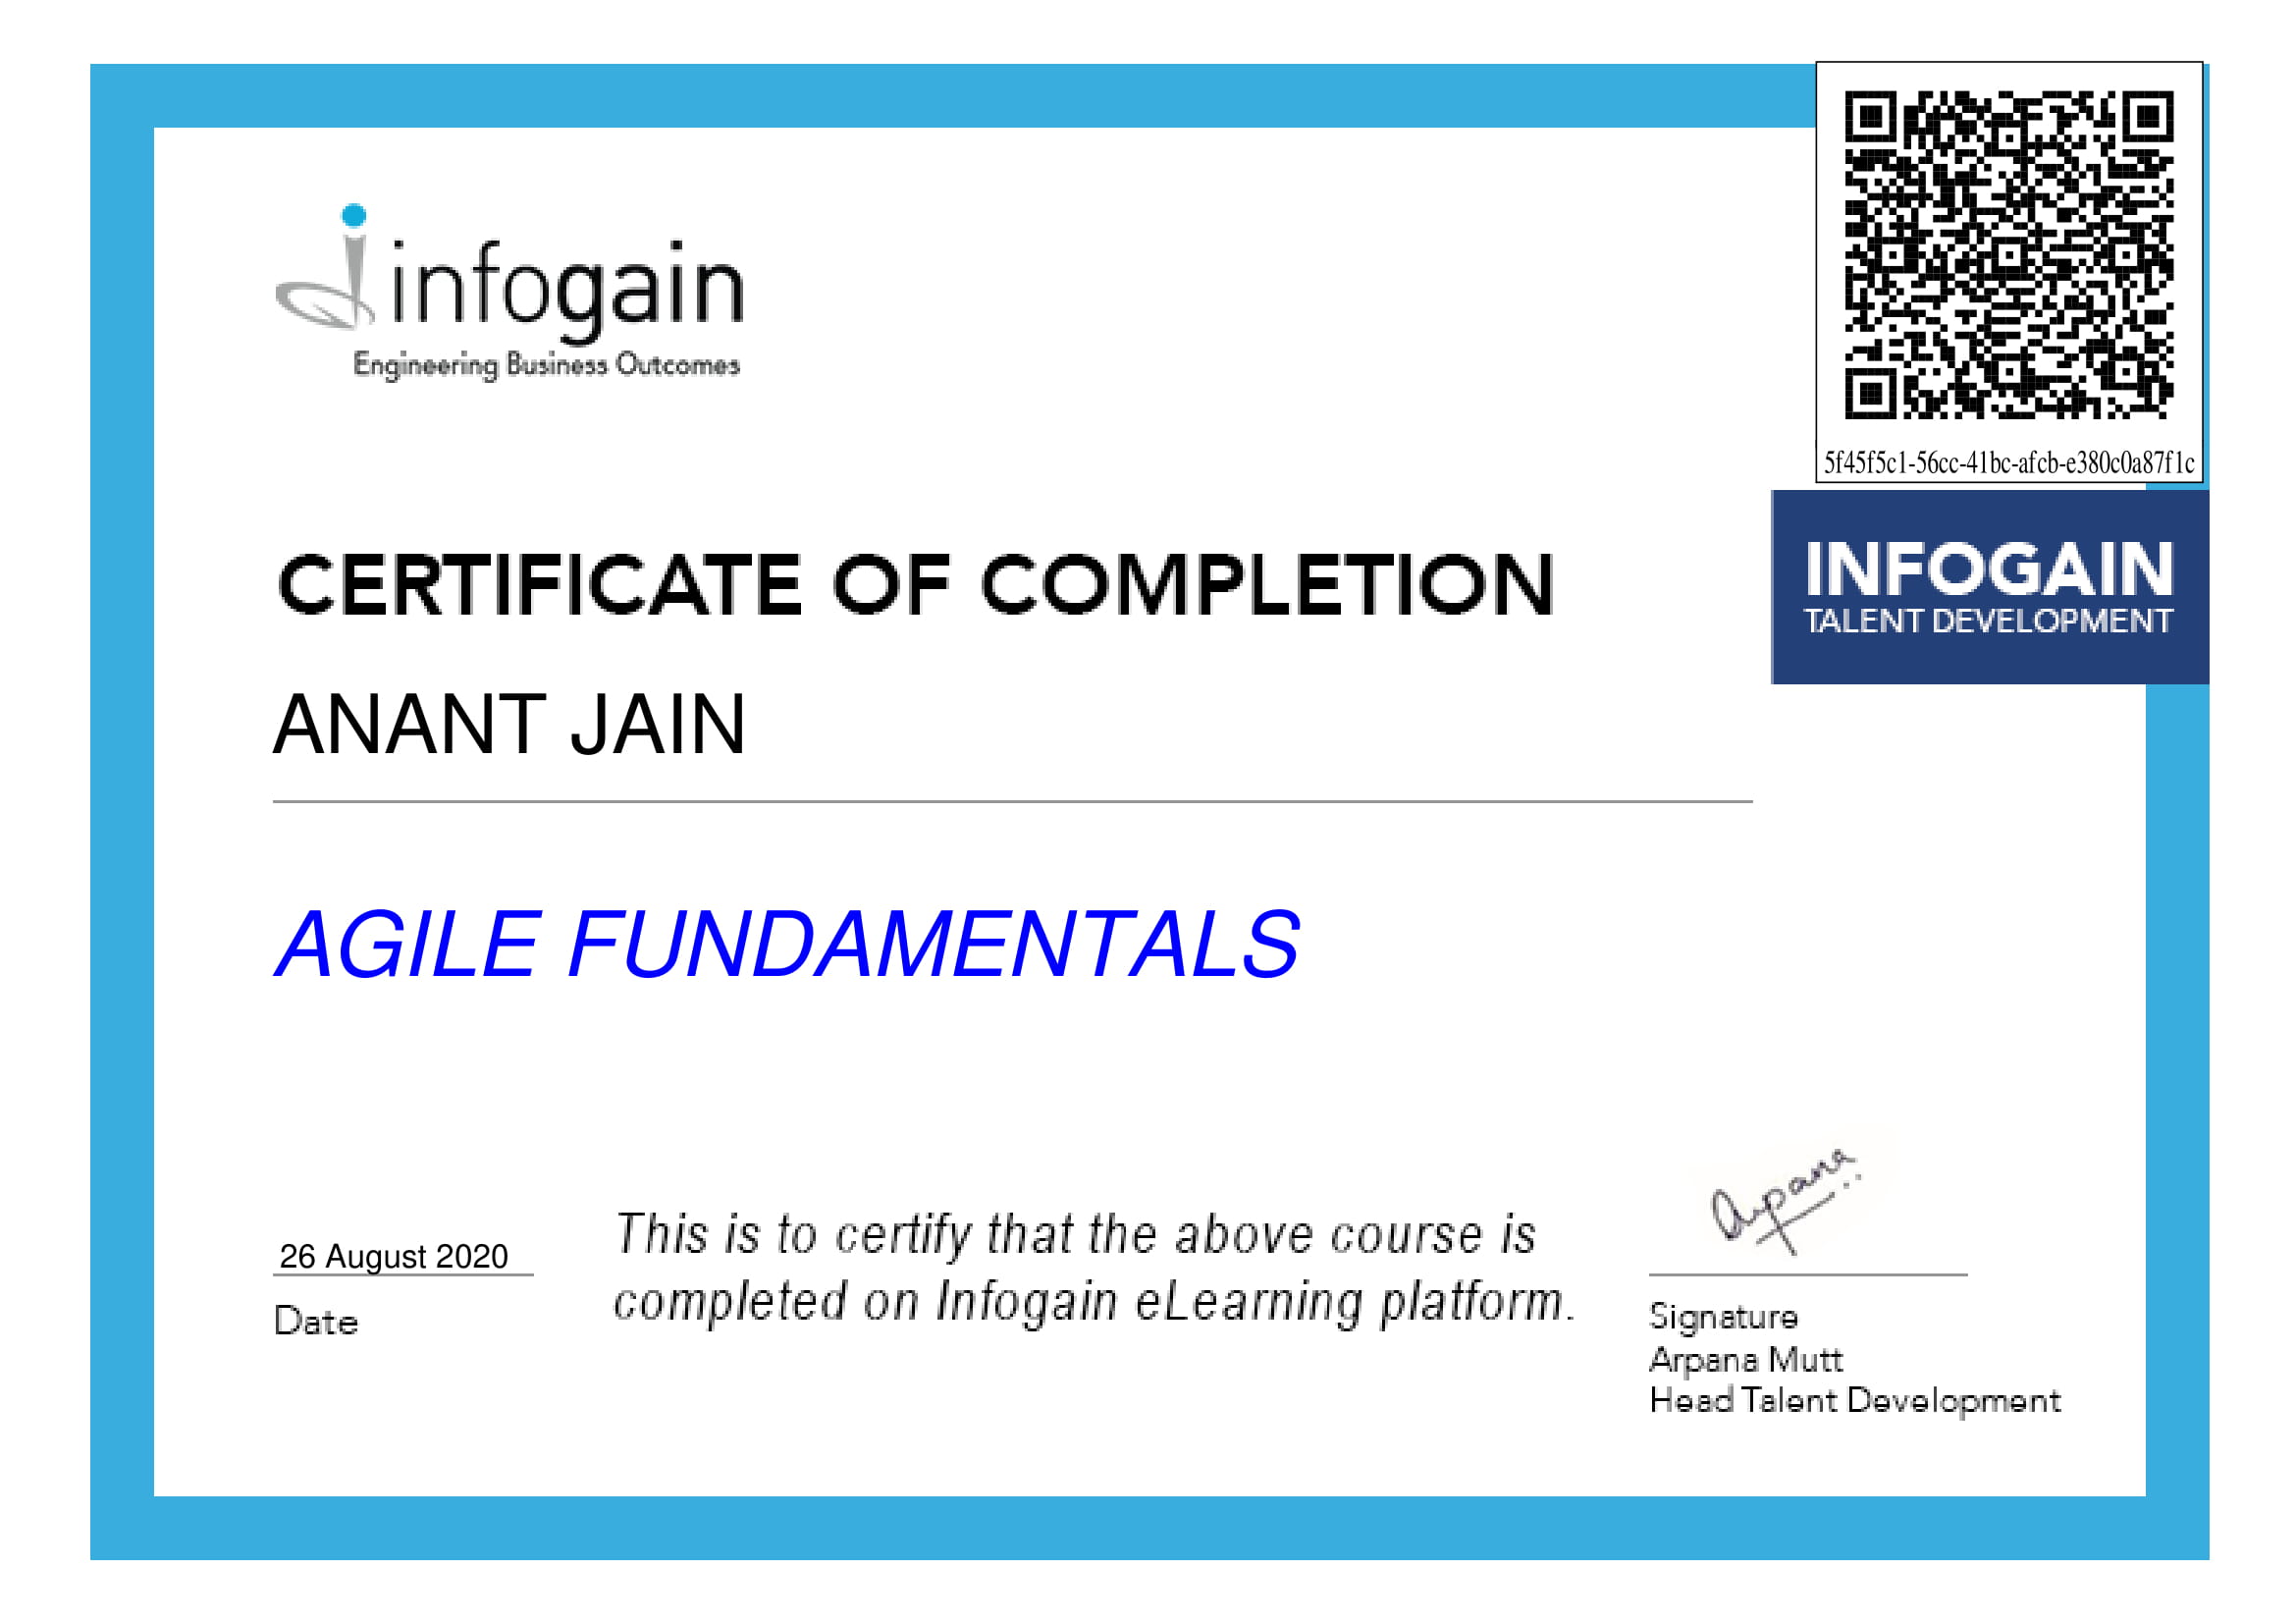 Infogain Certificate of completion Agile Fundamentals